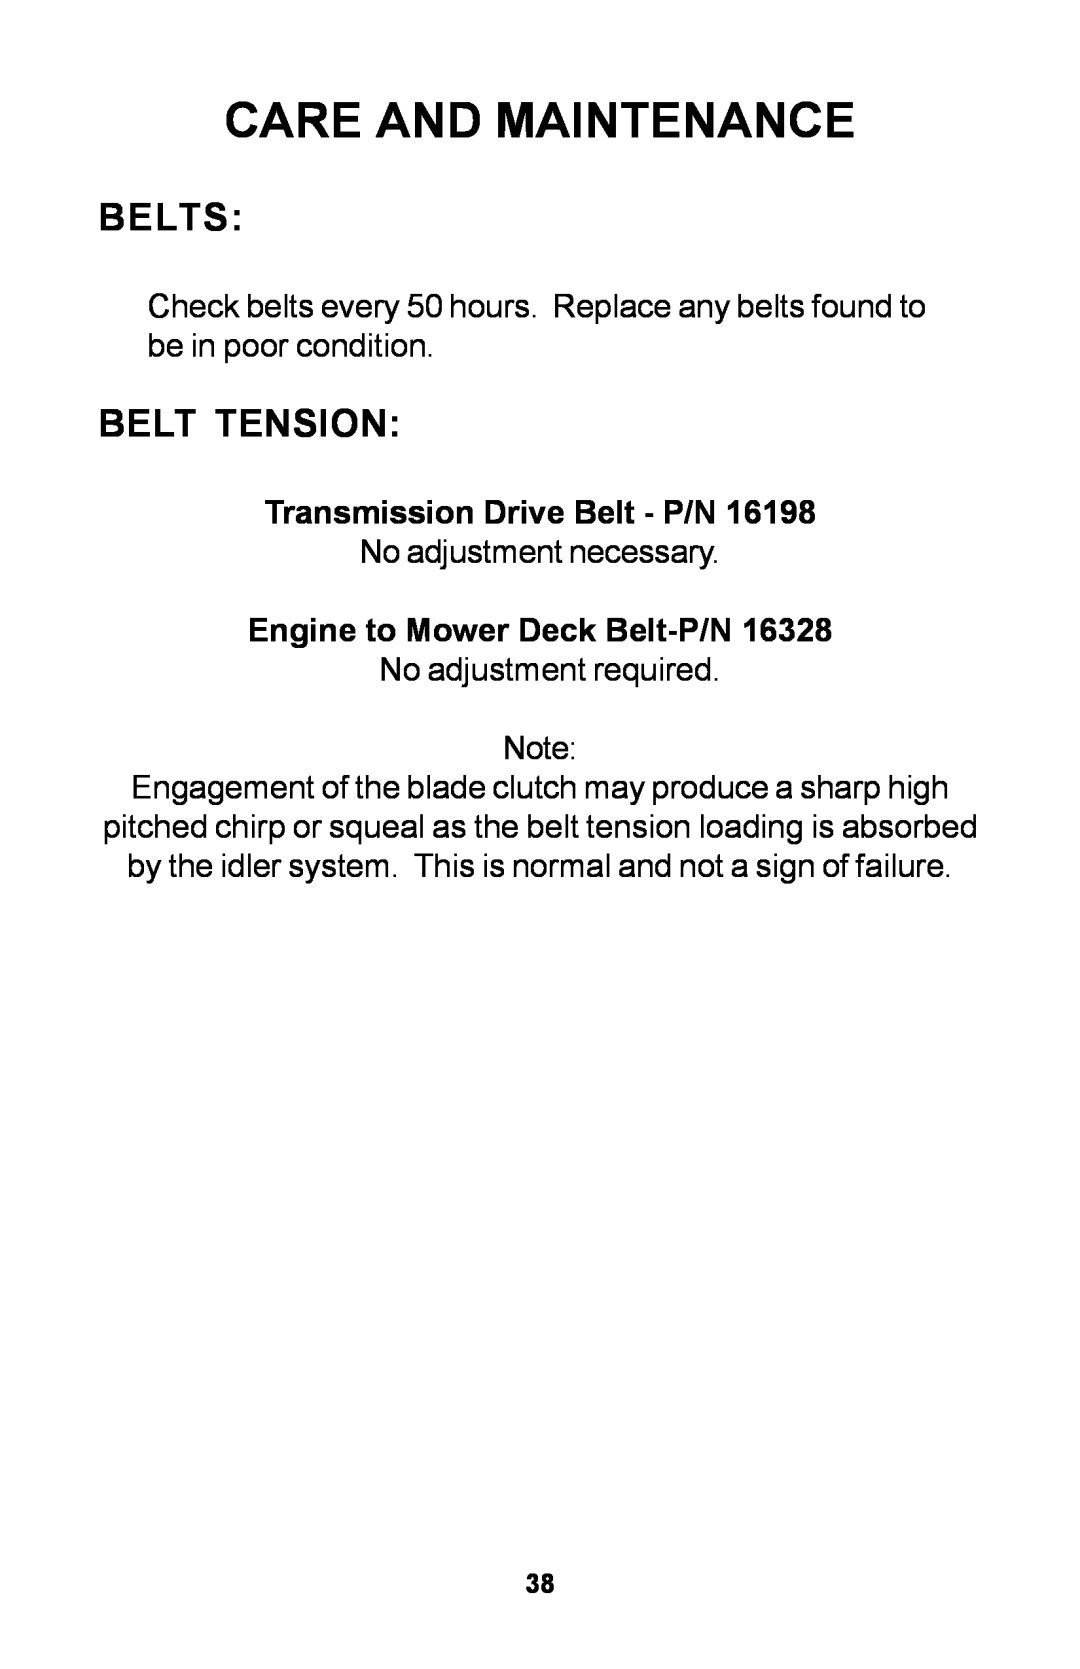 Dixon 30 Belts, Belt Tension, Care And Maintenance, Transmission Drive Belt - P/N, Engine to Mower Deck Belt-P/N16328 